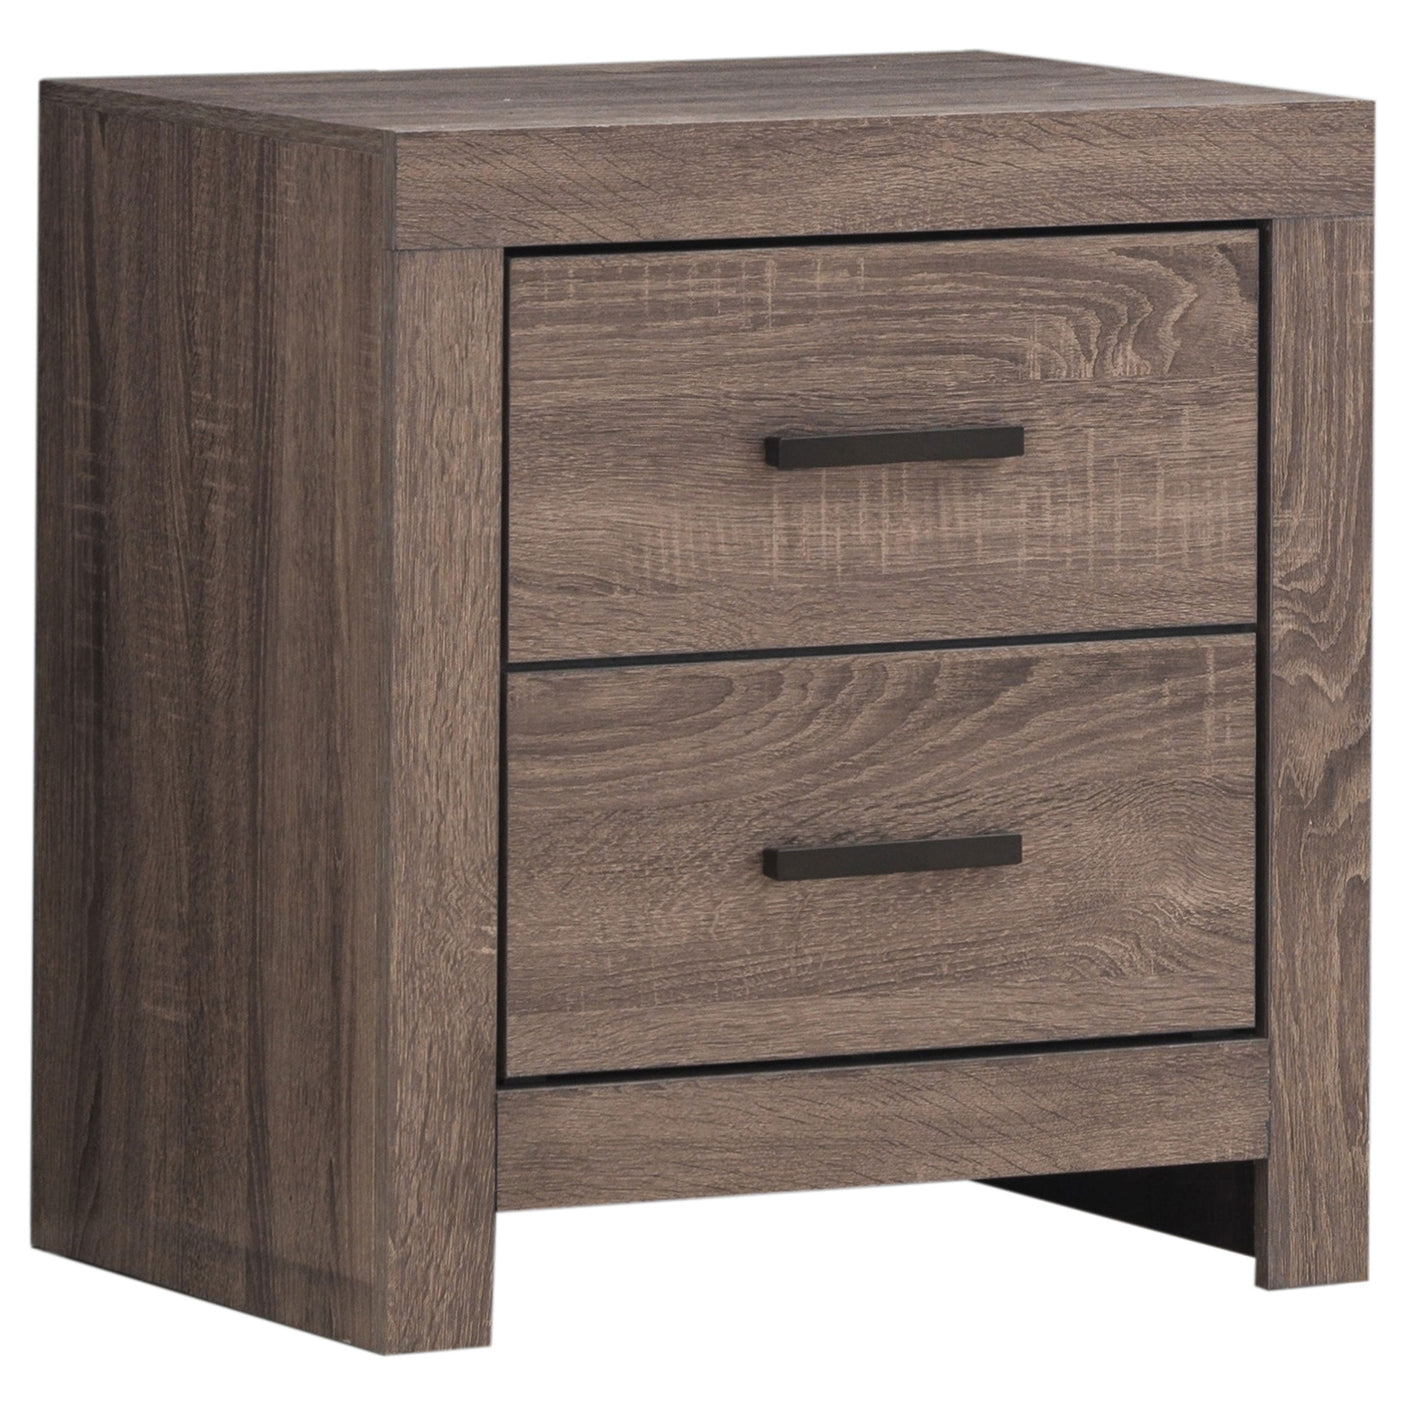 Nightstand - Brantford 2-drawer Nightstand Barrel Oak